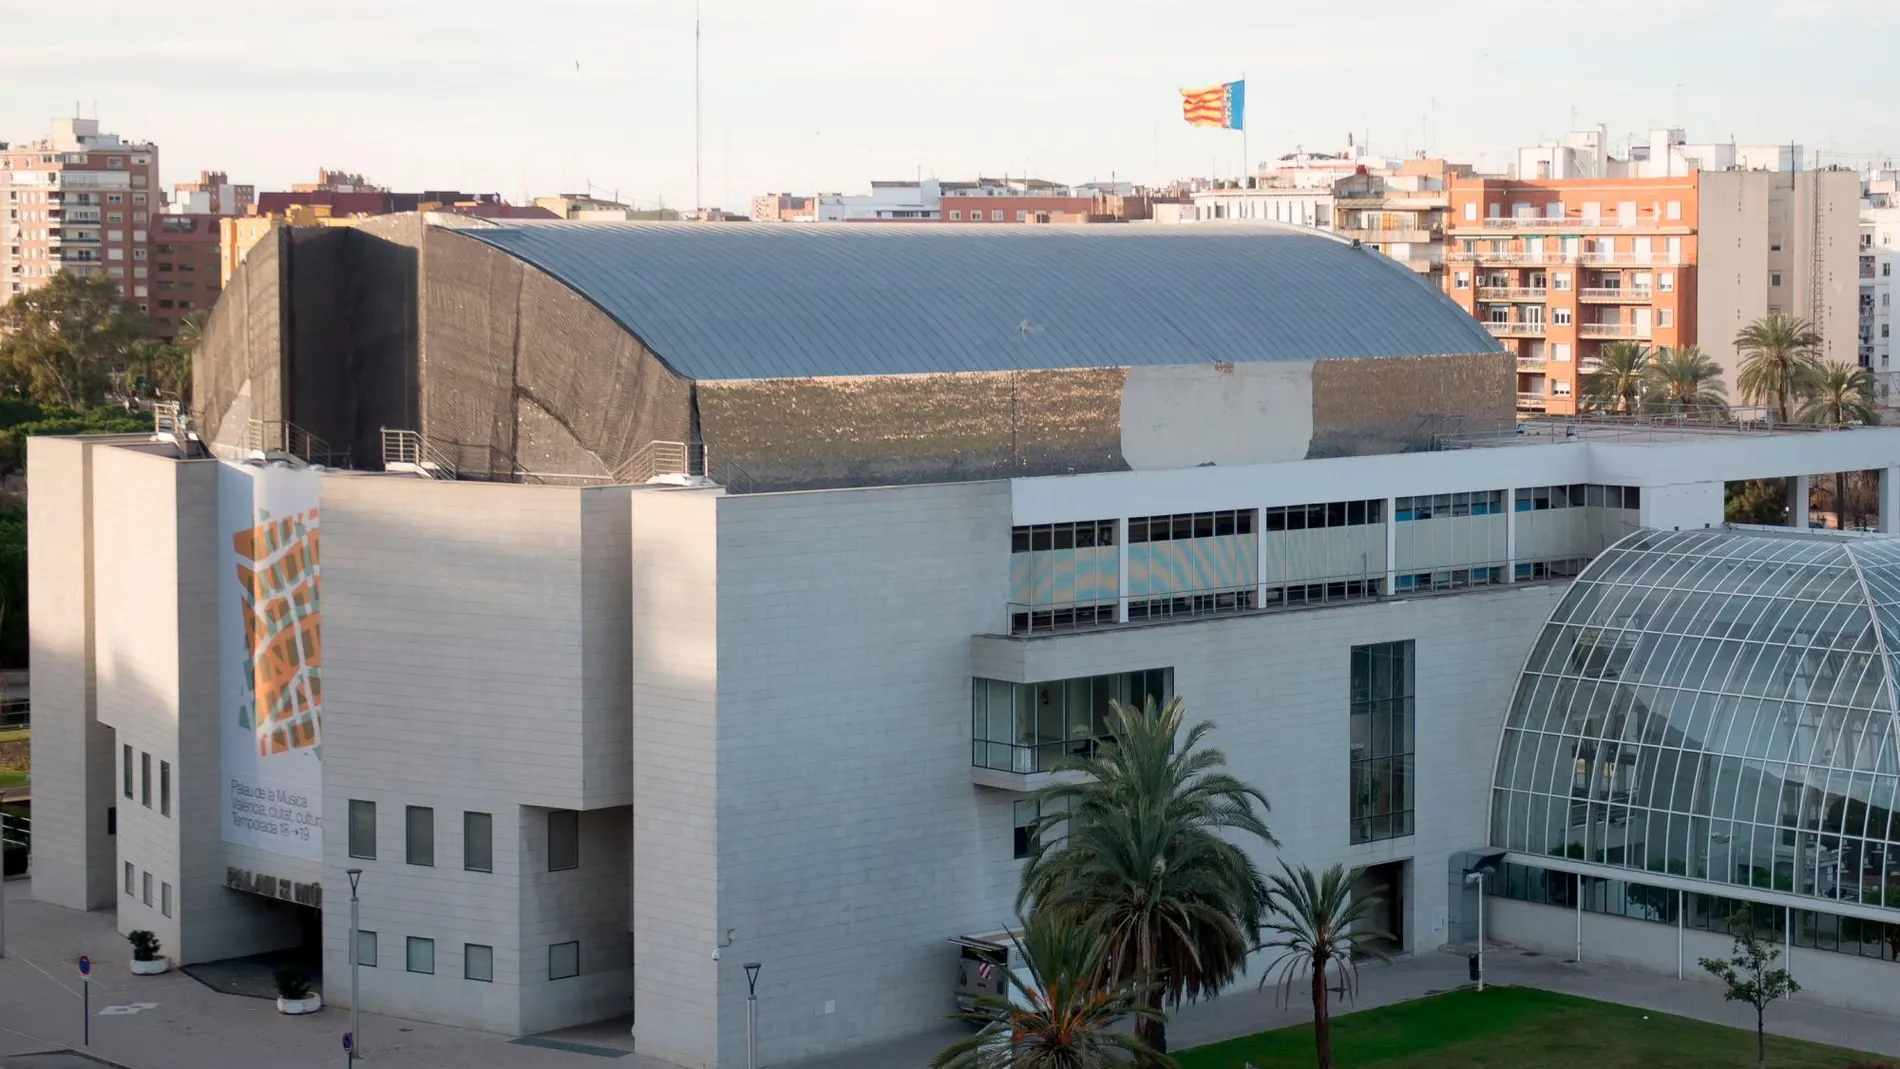 Imagen del Palau de la Música de Valencia